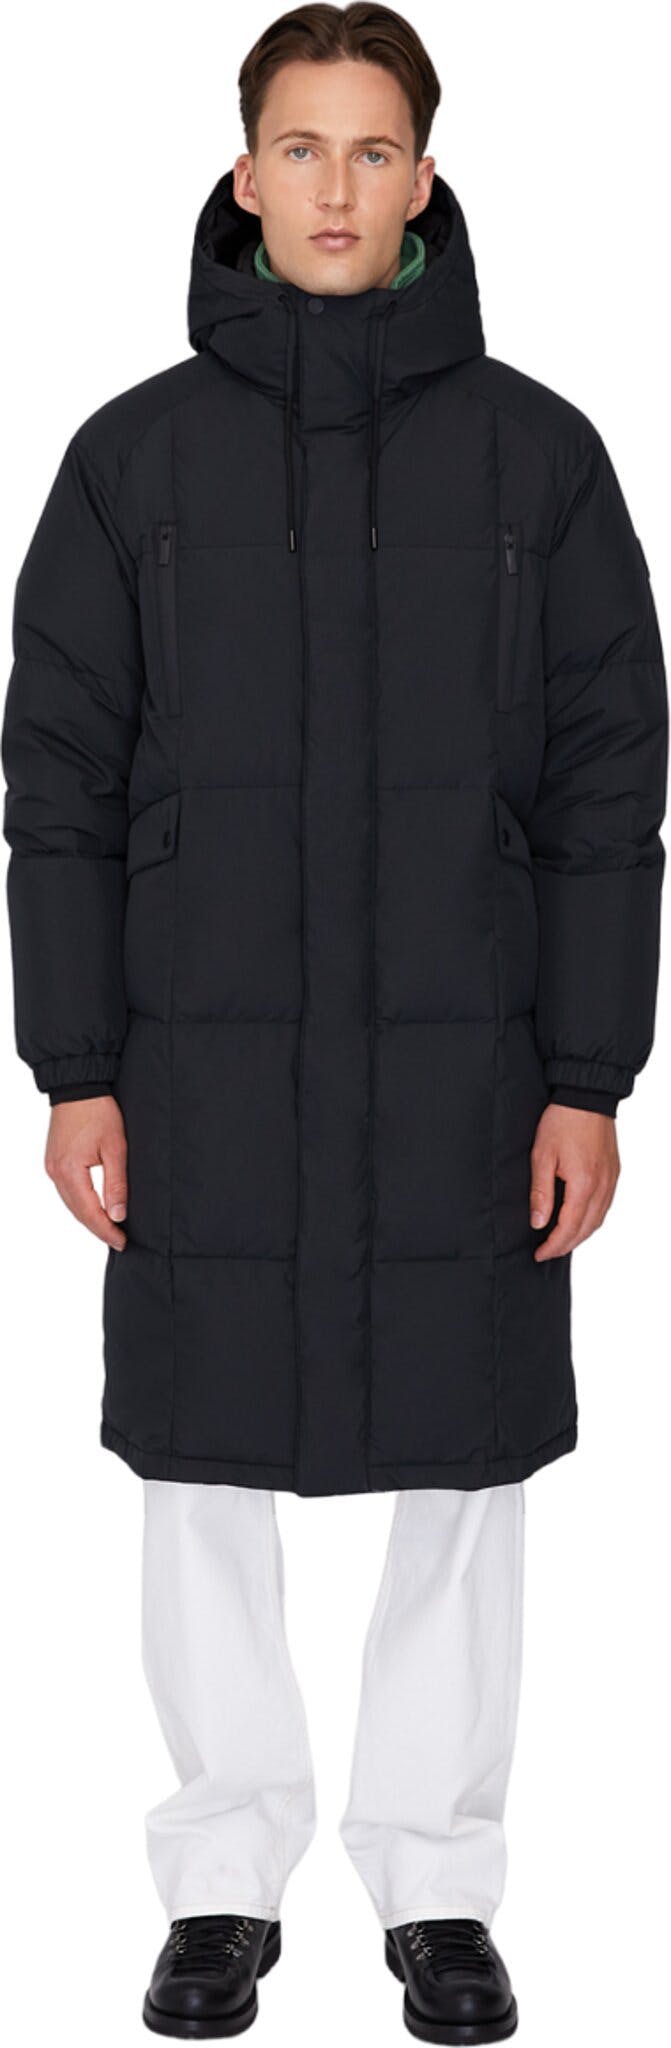 Product image for Jackson Hooded Down Puffer Jacket - Regular - Men's